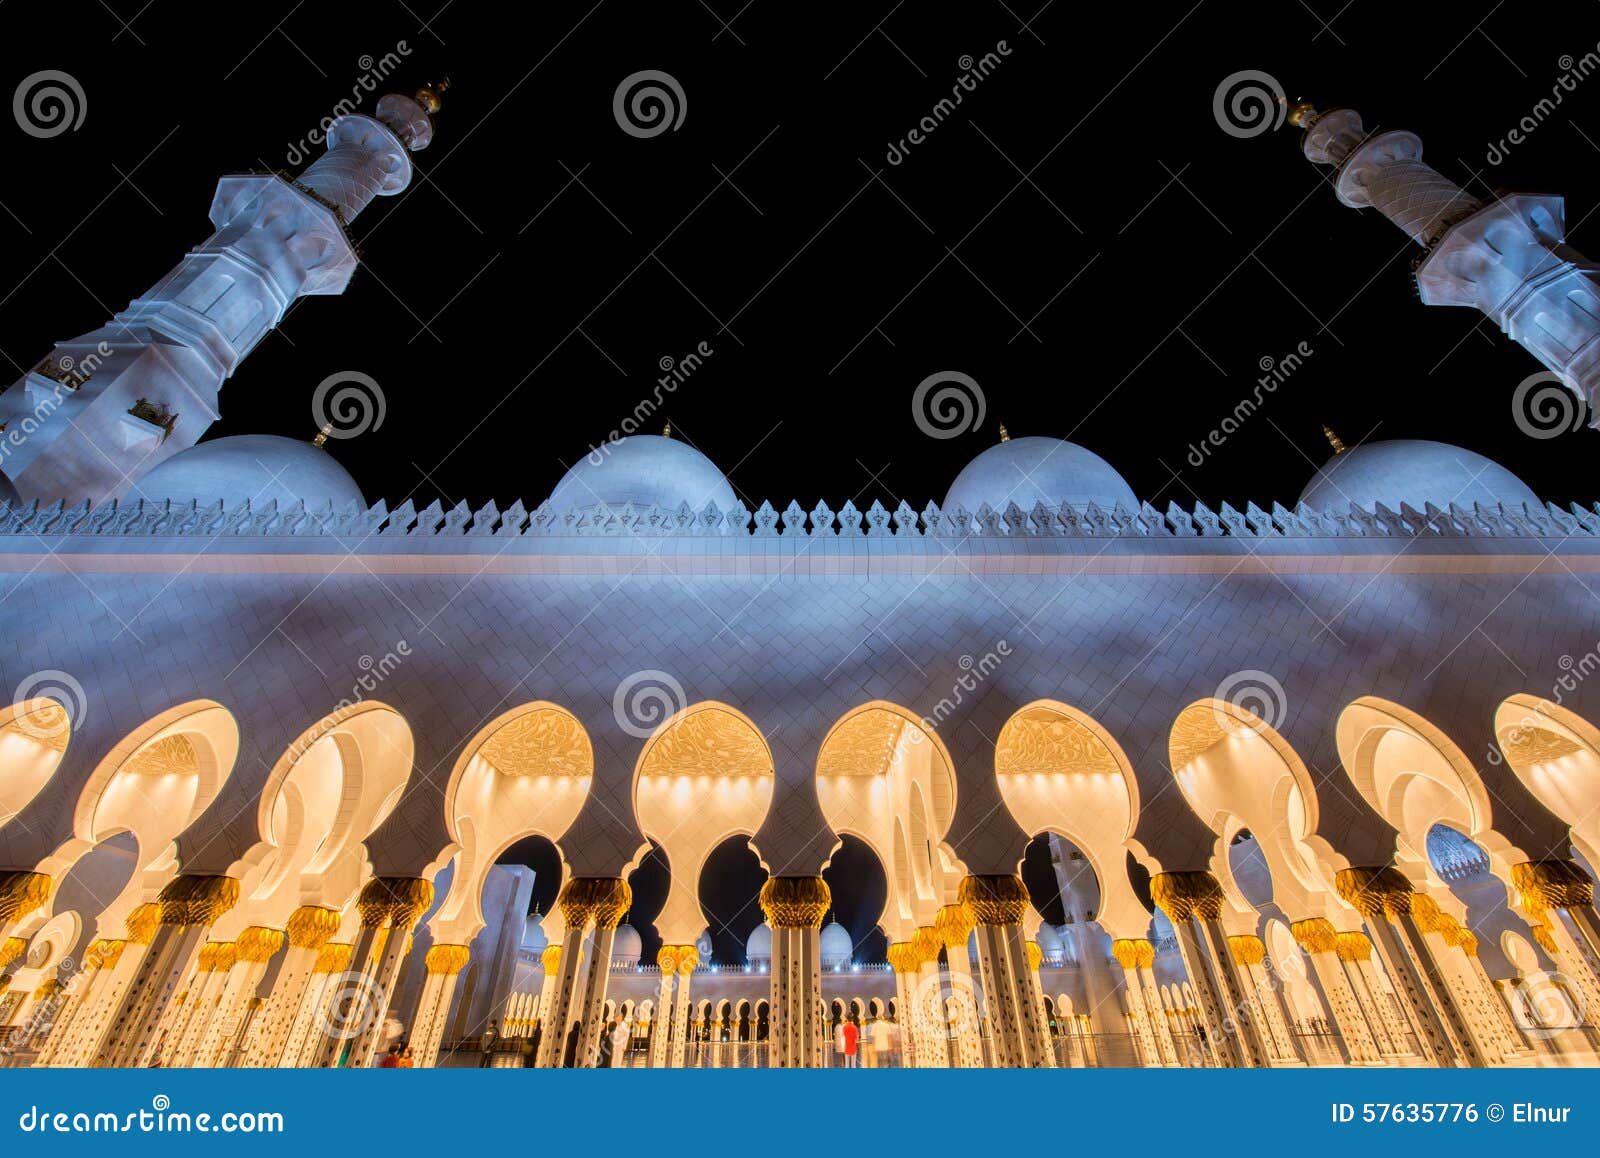 the sheikh zayed mosque in abu dabi